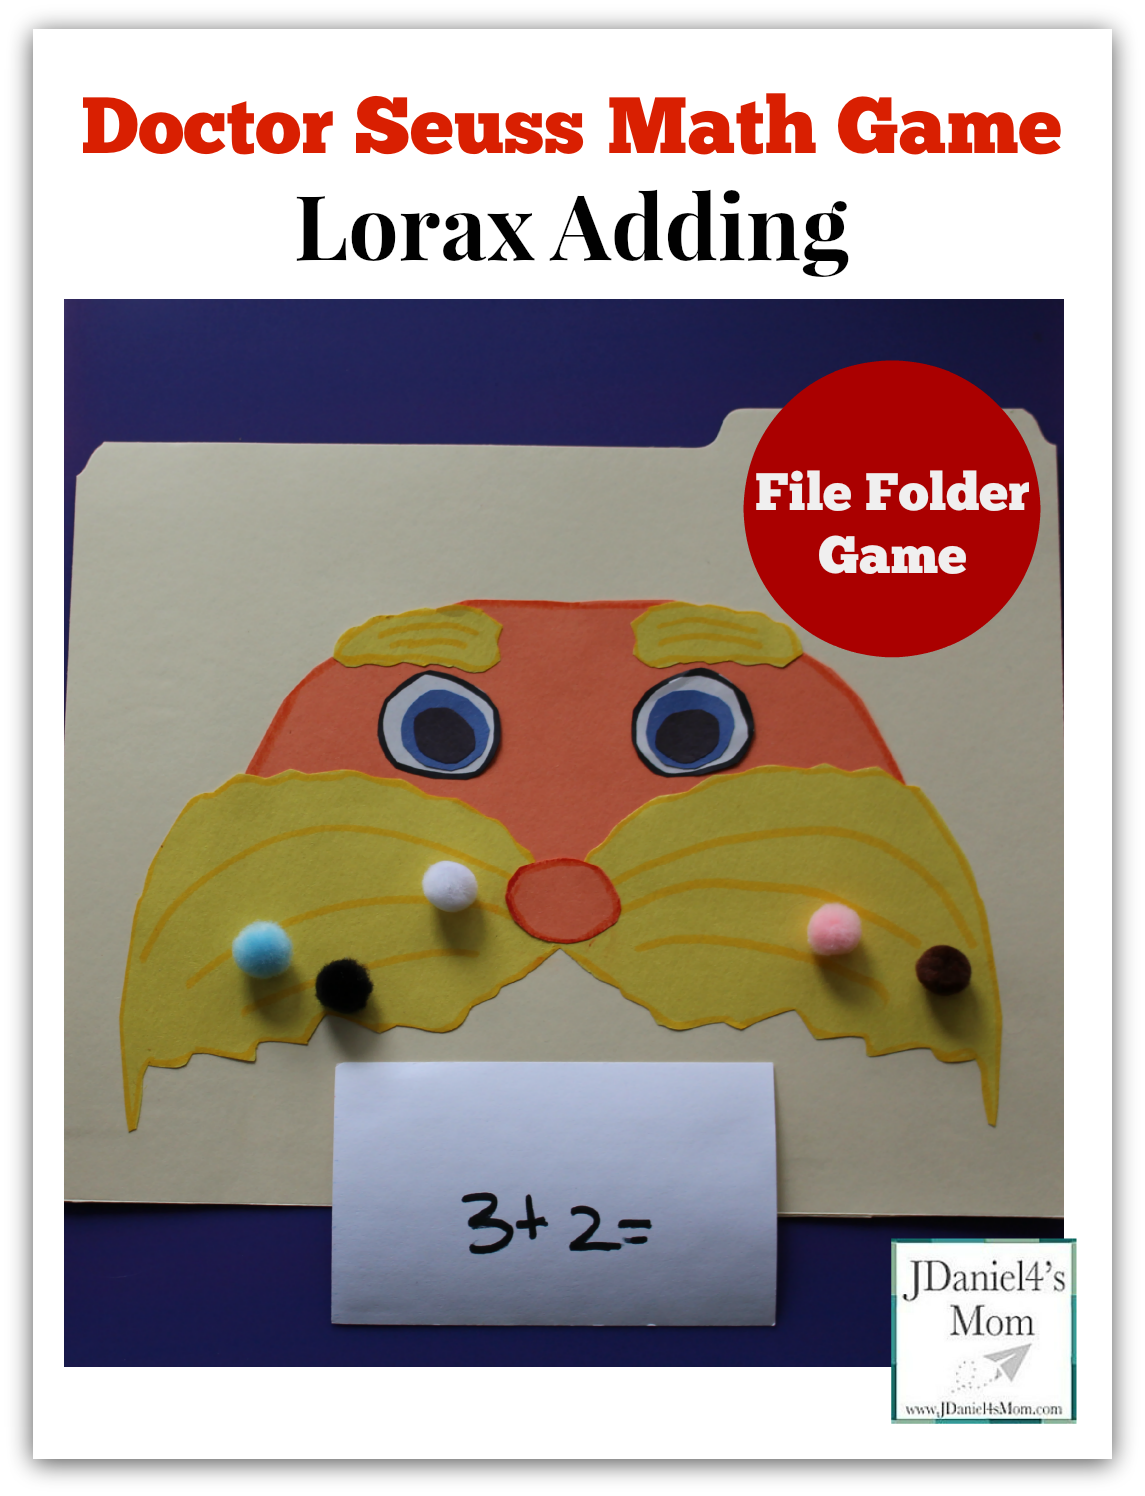 doctor seuss math game lorax adding with file folder